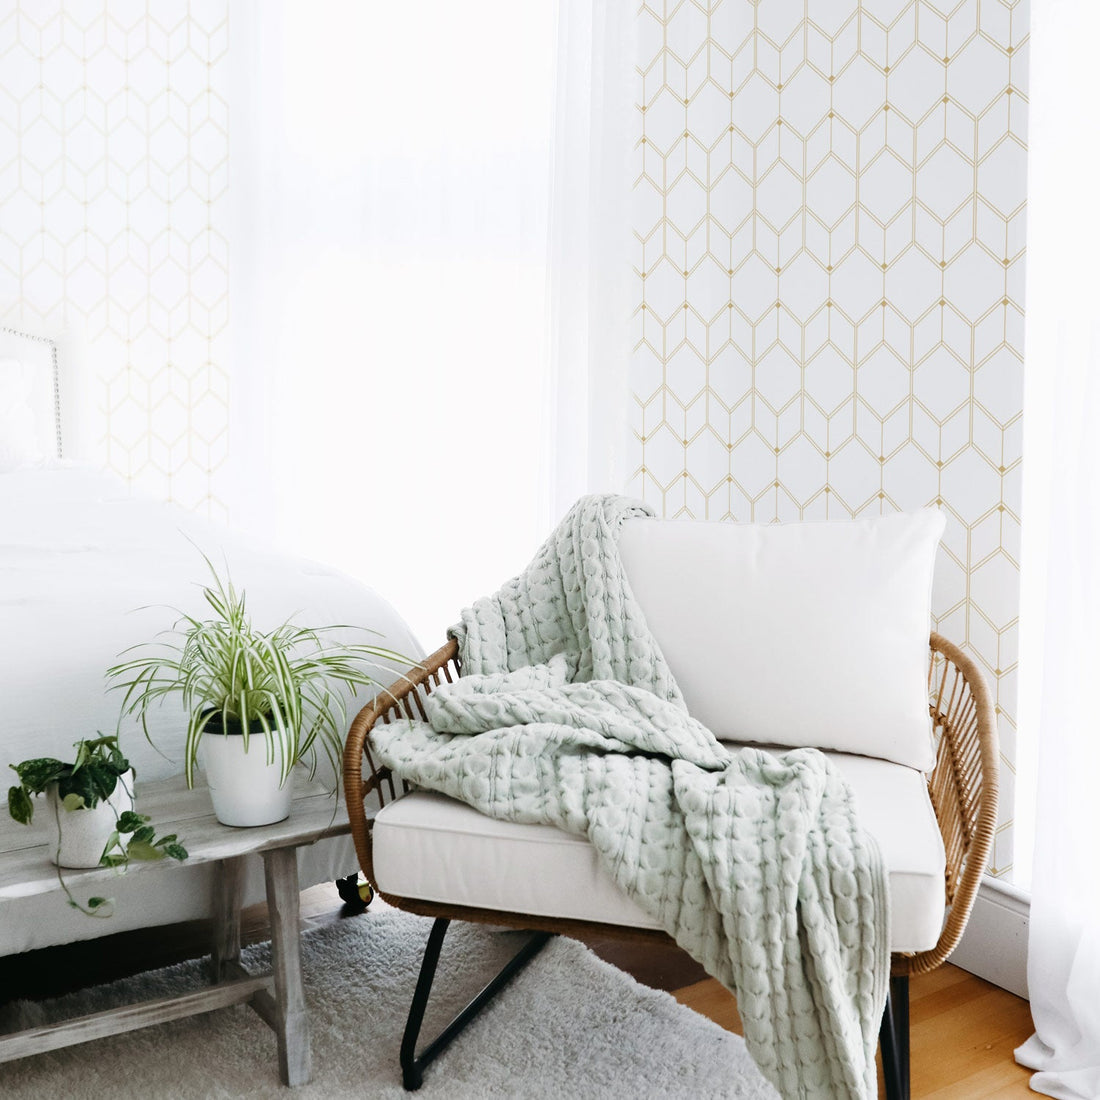 Faux gold color geometric design removable wallpaper in white boho bedroom interior